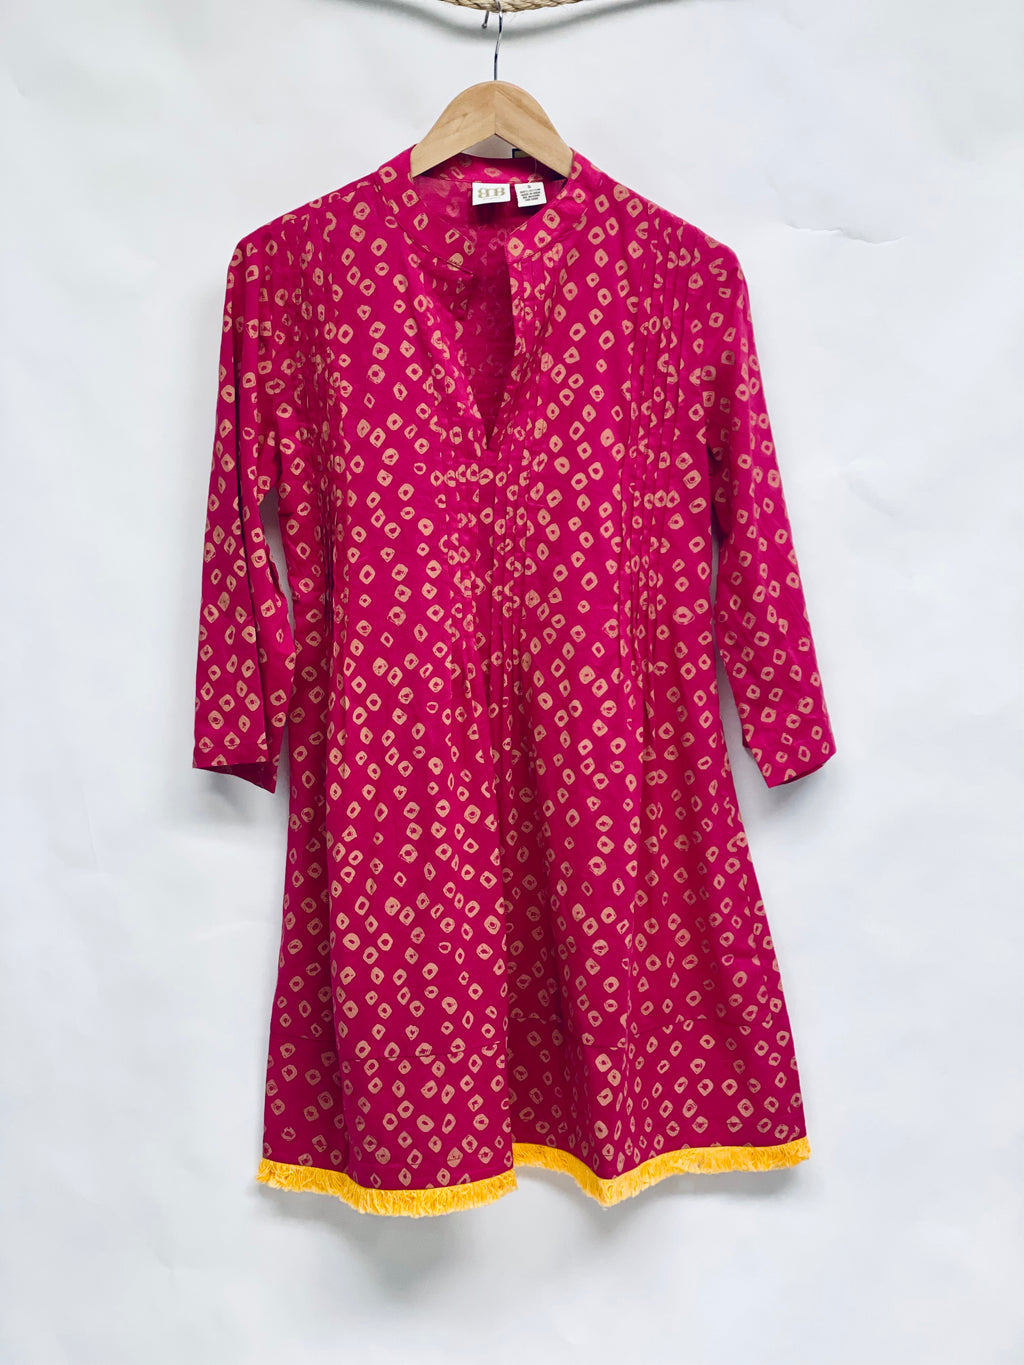 Reliance Trends (Aashima Mall) in Misrod,Bhopal - Best Women Readymade  Garment Retailers in Bhopal - Justdial